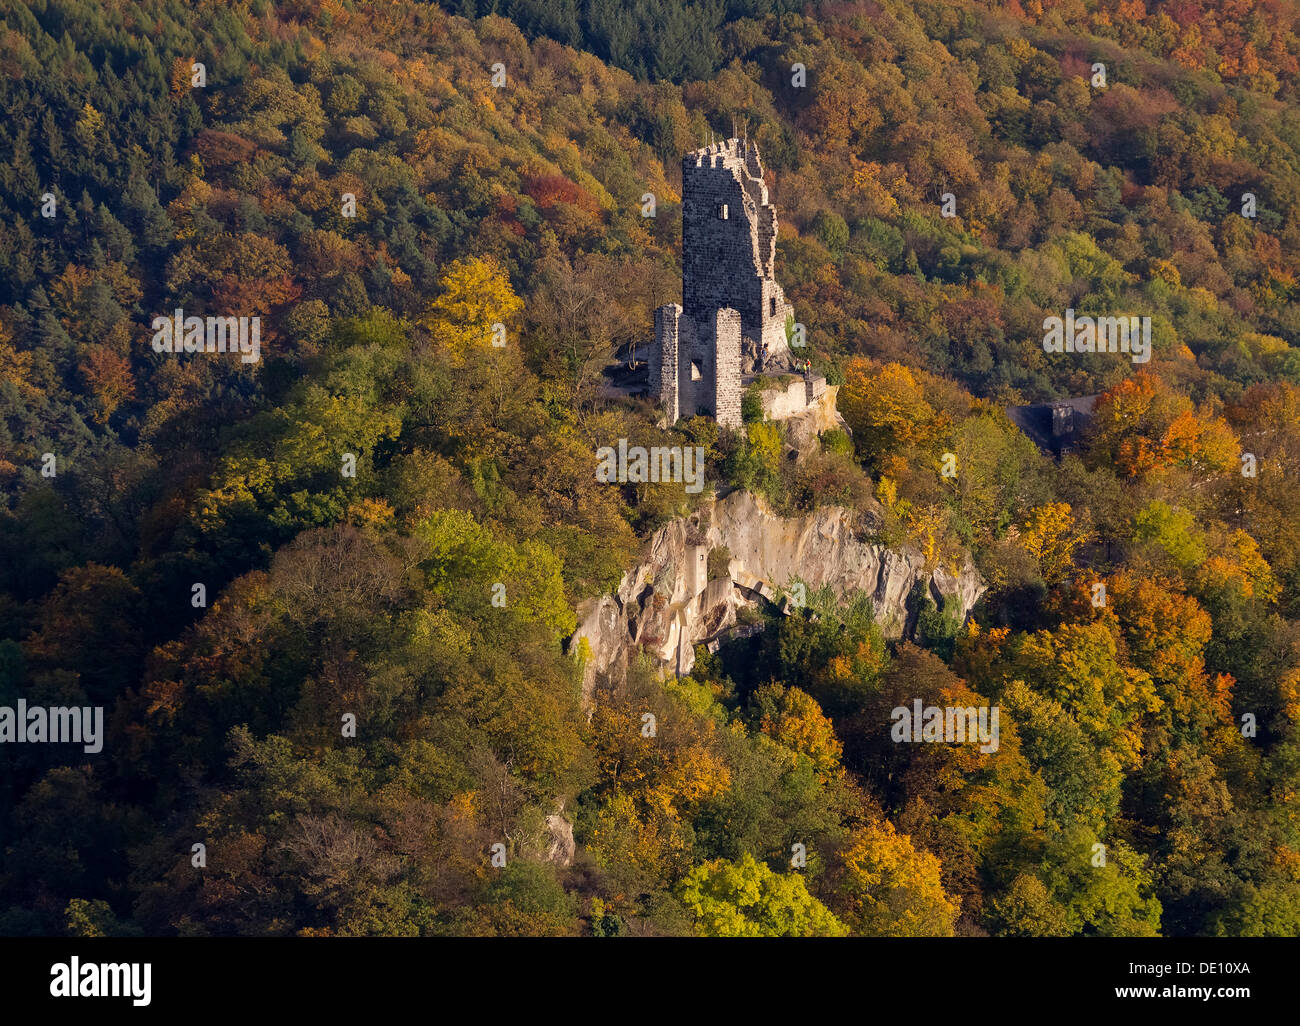 Vista aerea, Schloss Castello Drachenburg, Drachenfels, Dragon's Rock, autunno Foto Stock